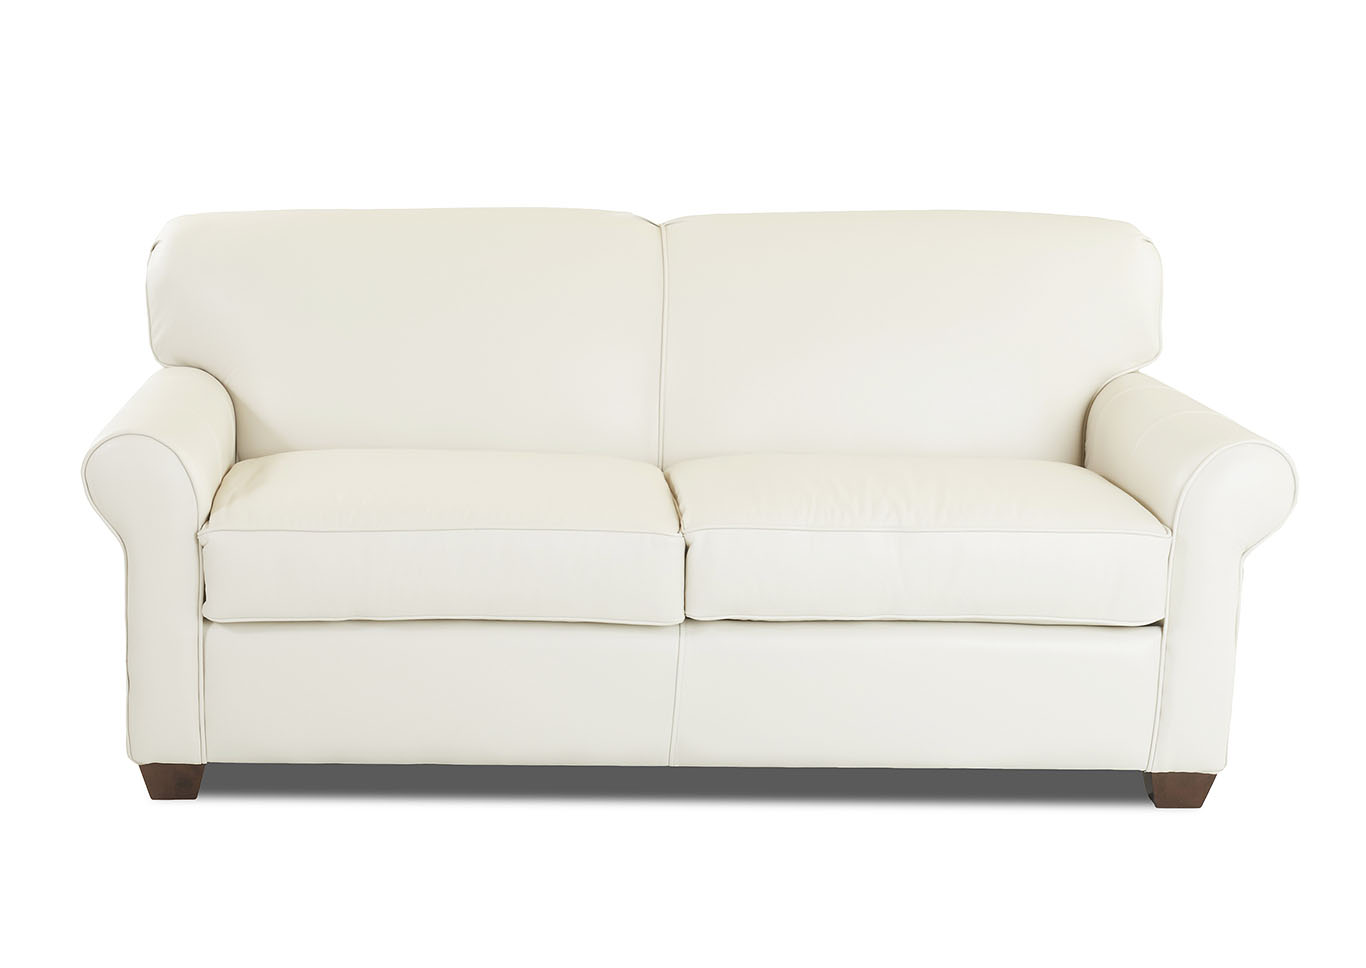 Mayhew White Leather Sleeper Sofa,Klaussner Home Furnishings